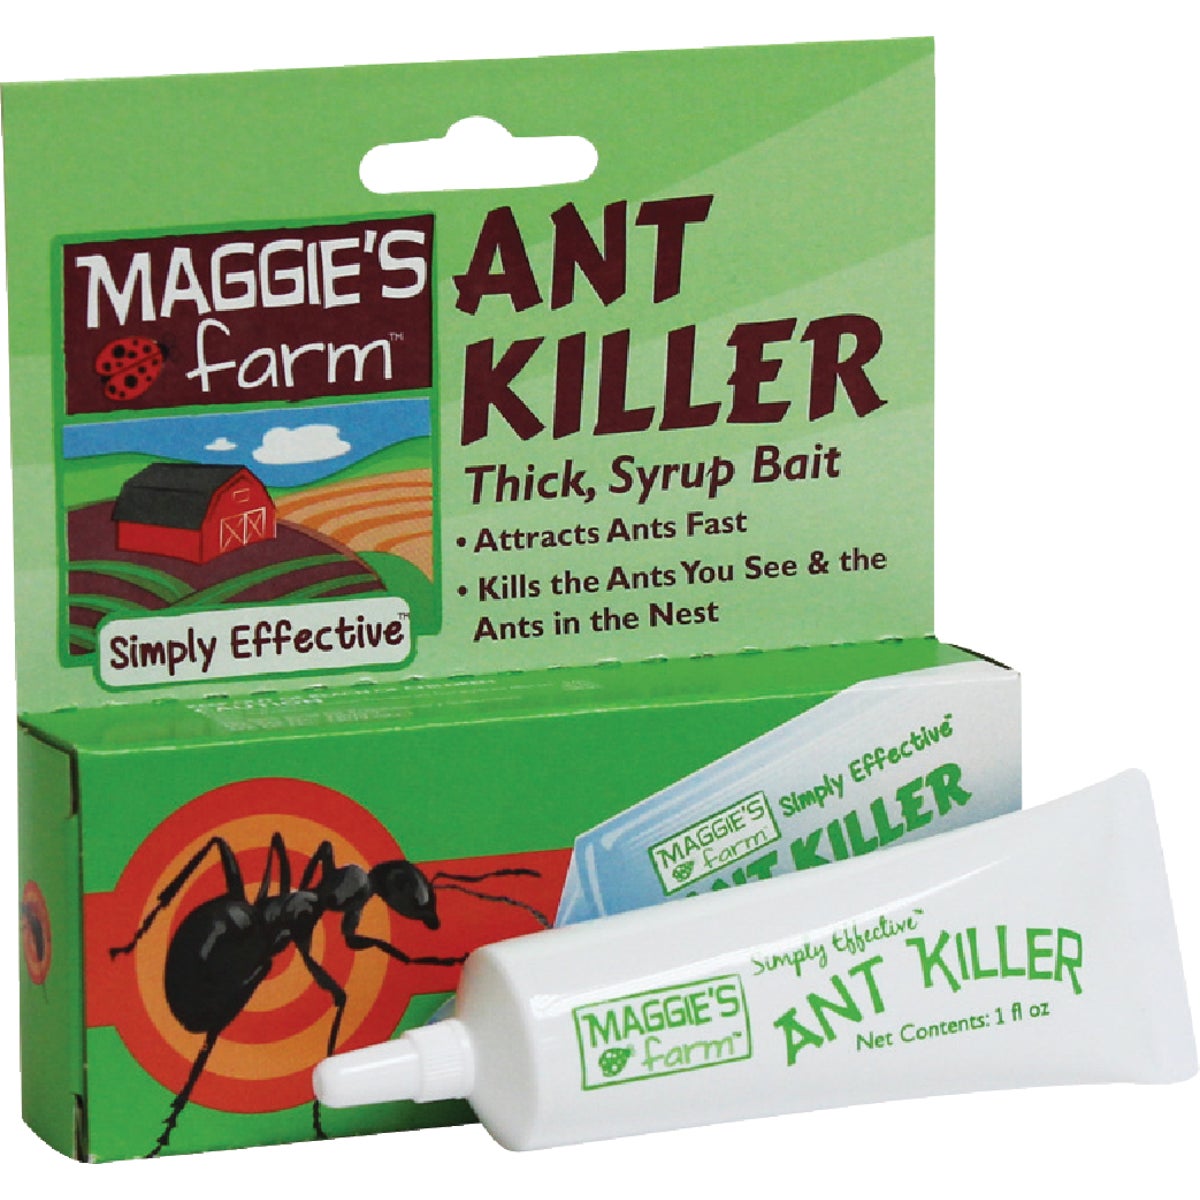 Item 704870, Borax-based ant killer.